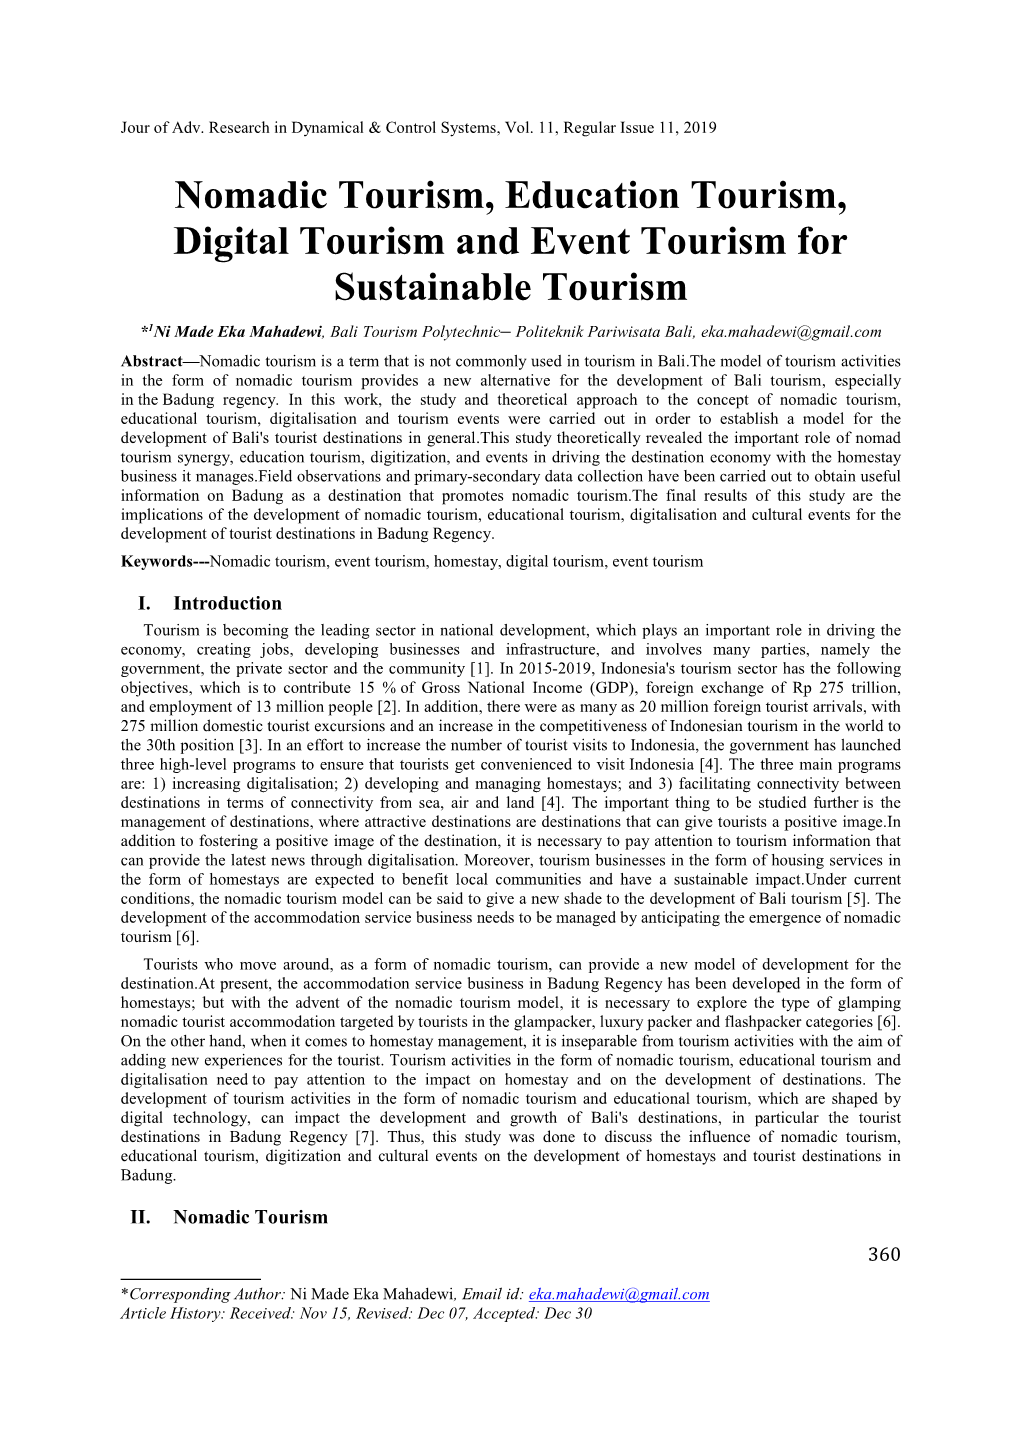 Nomadic Tourism, Education Tourism, Digital Tourism and Event Tourism for Sustainable Tourism